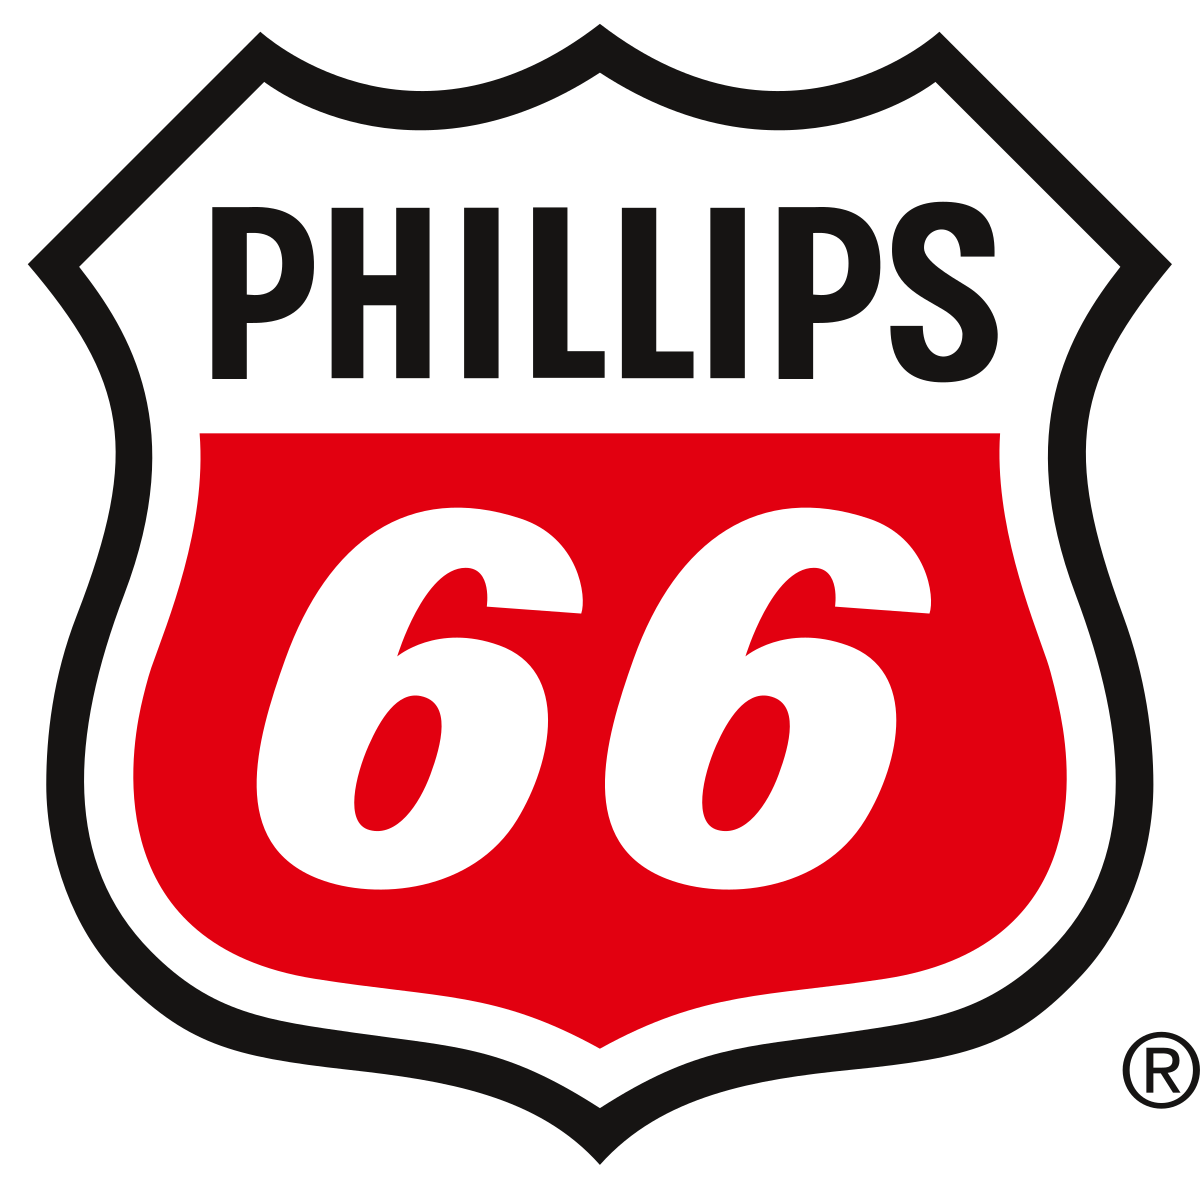 decorative: Phillips66 logo